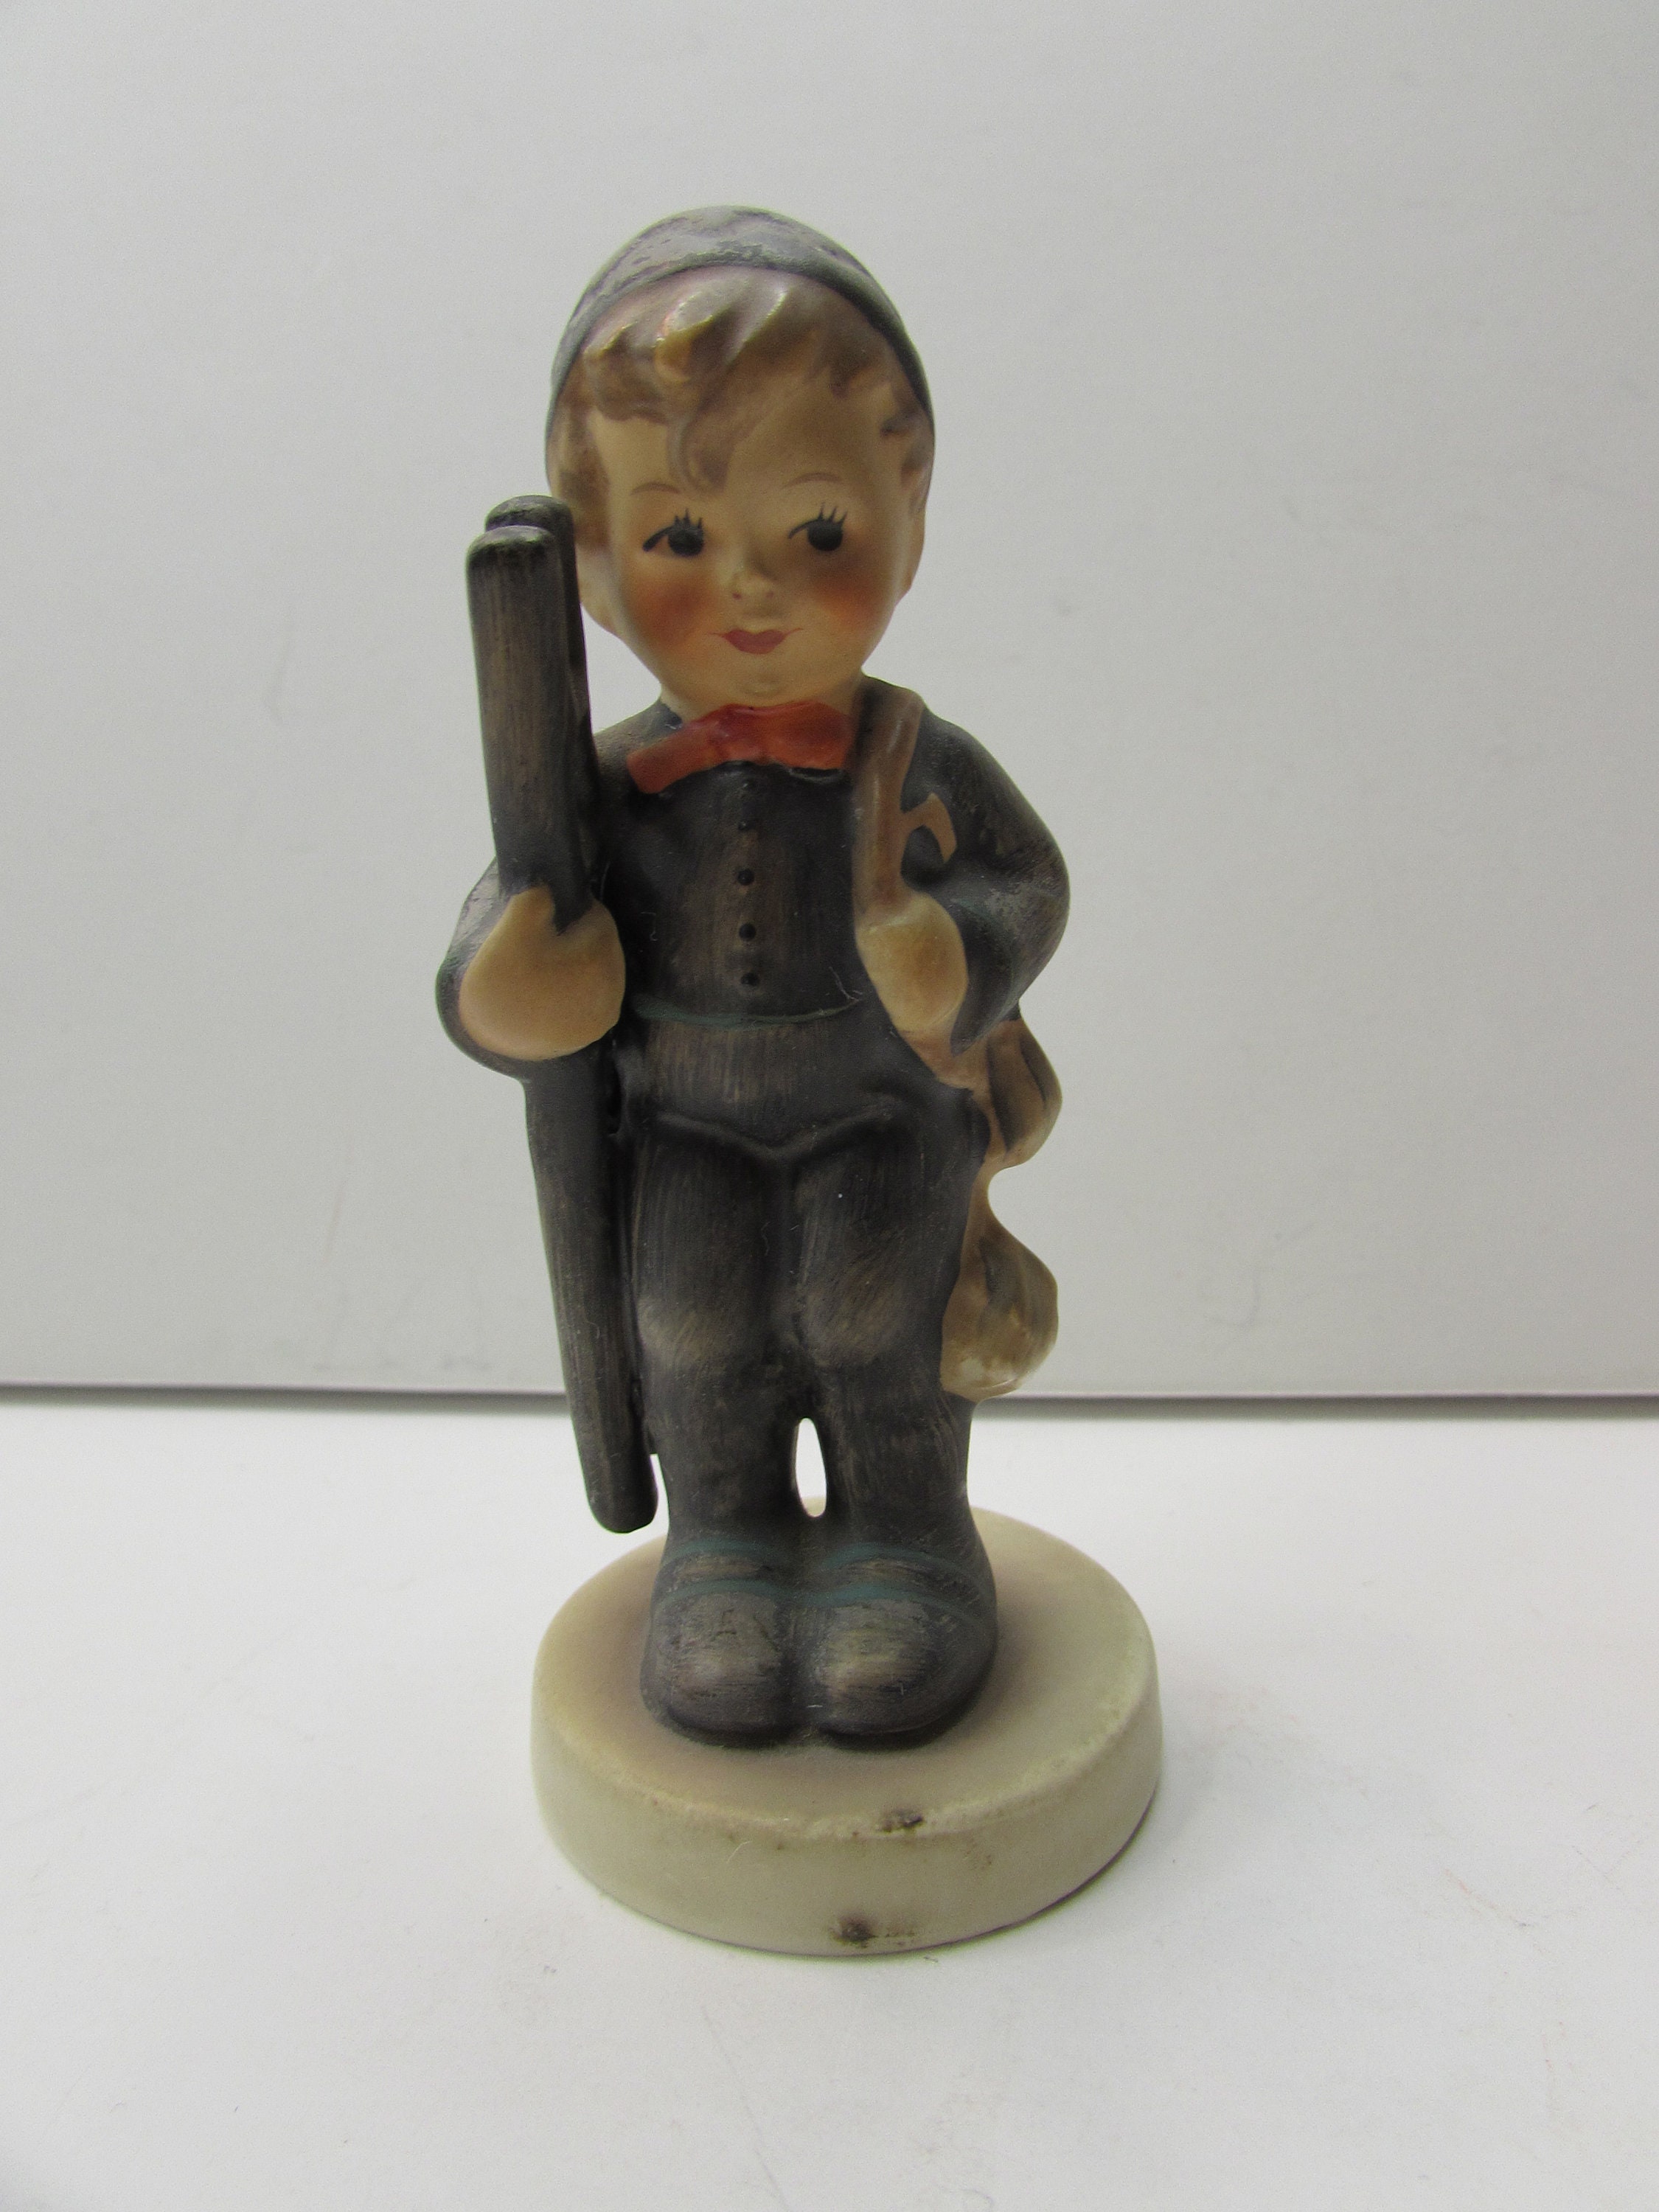 Vintage Hummel Figurine KF40 - Chimney Sweep by M. I. Hummel on Parigi Books